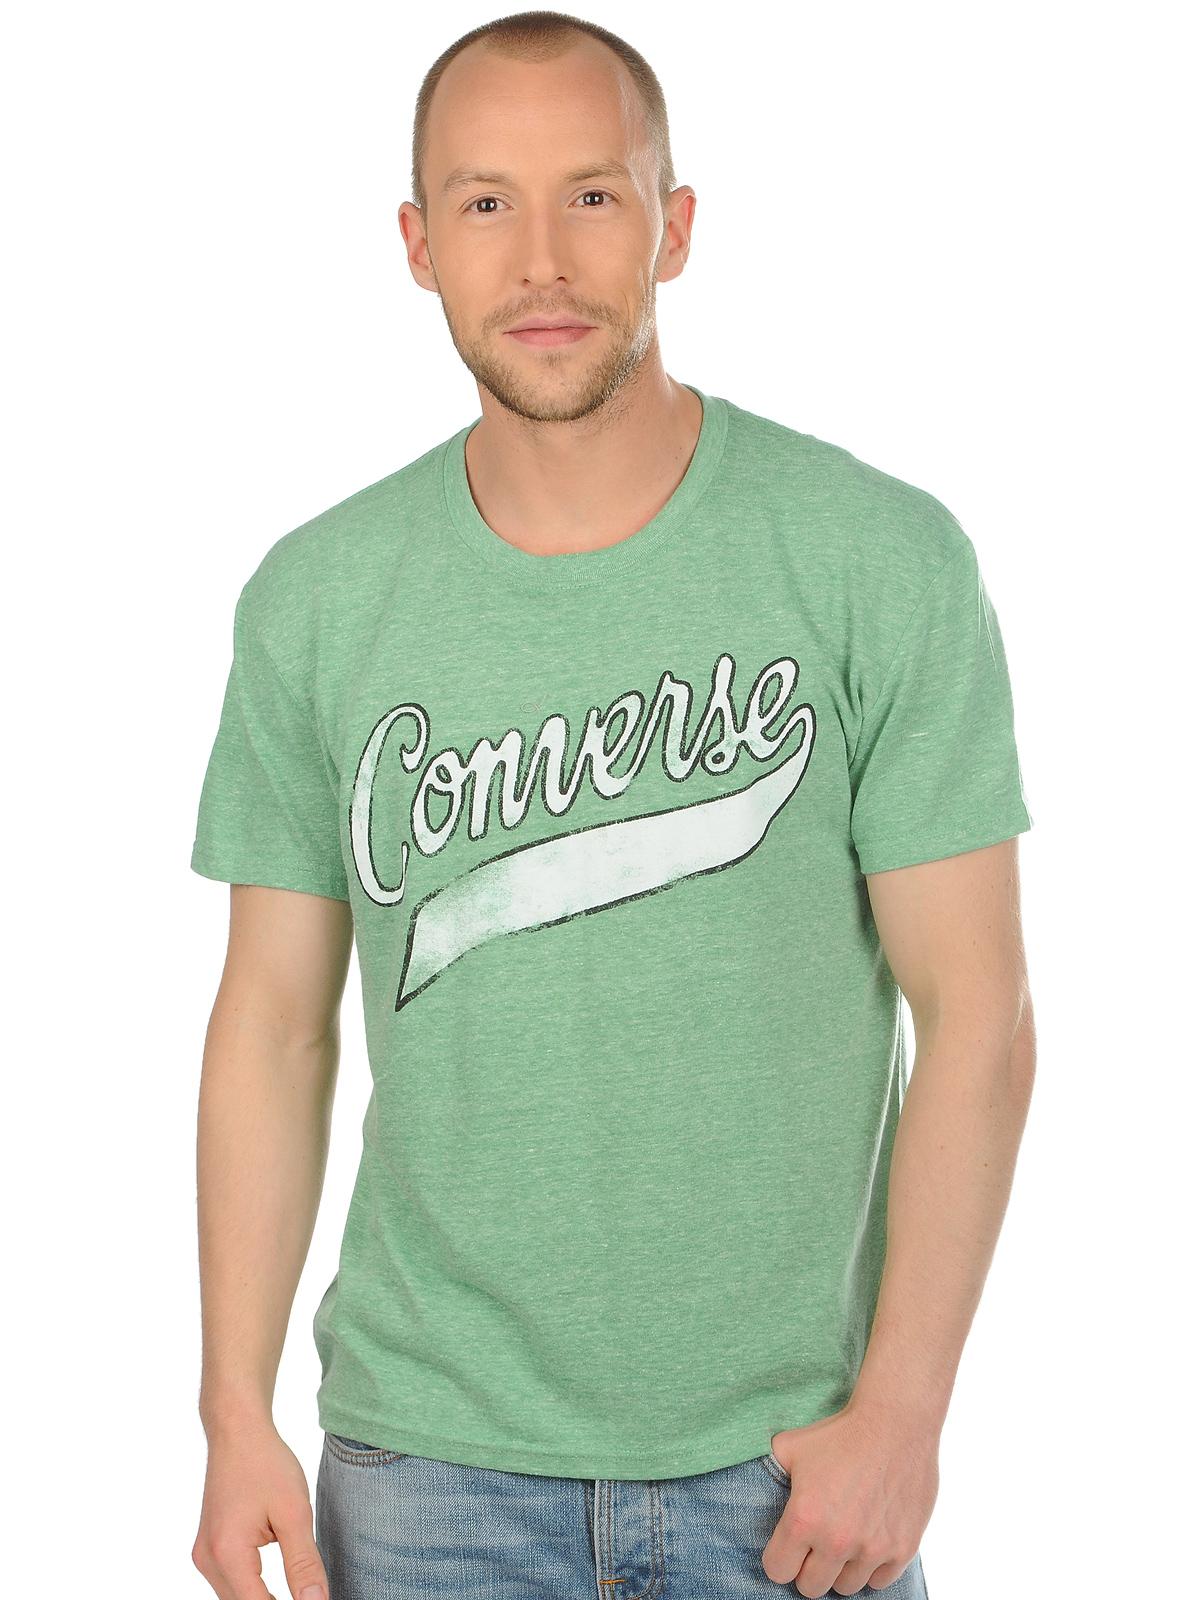 Foto Converse All Star Camiseta verde S foto 590638